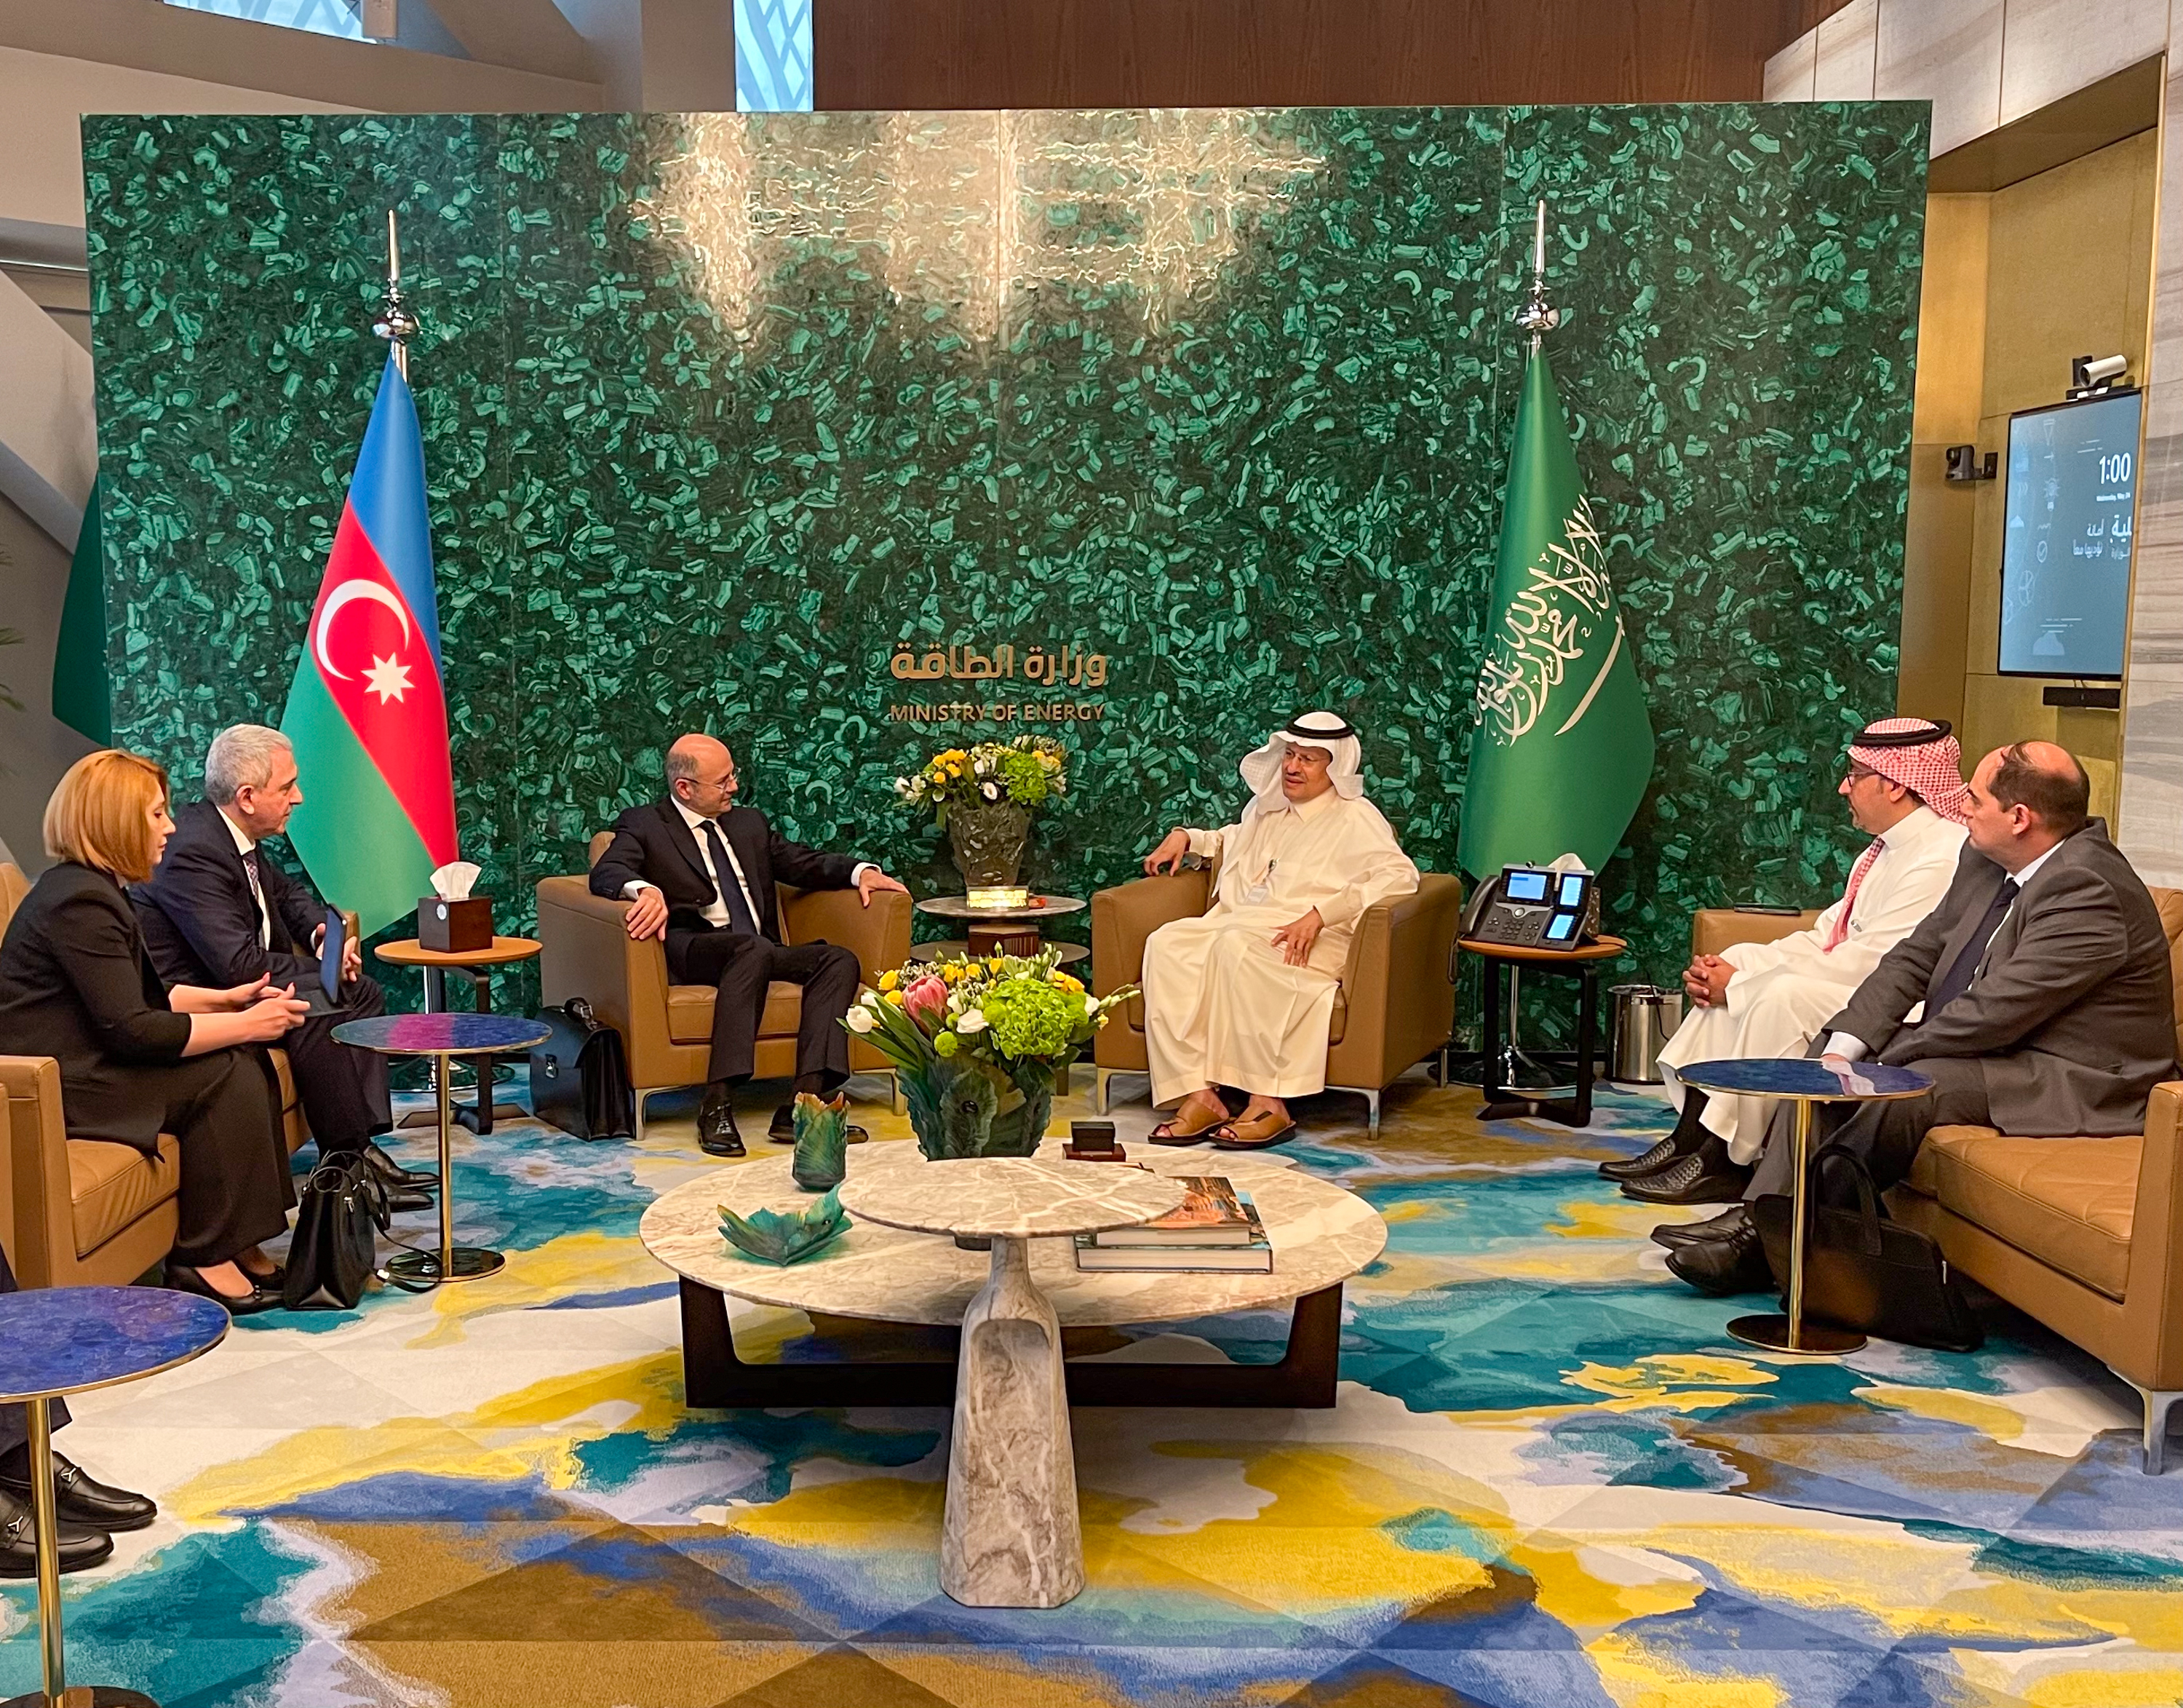  Azerbaijan signs energy cooperation agreement with Saudi Arabia